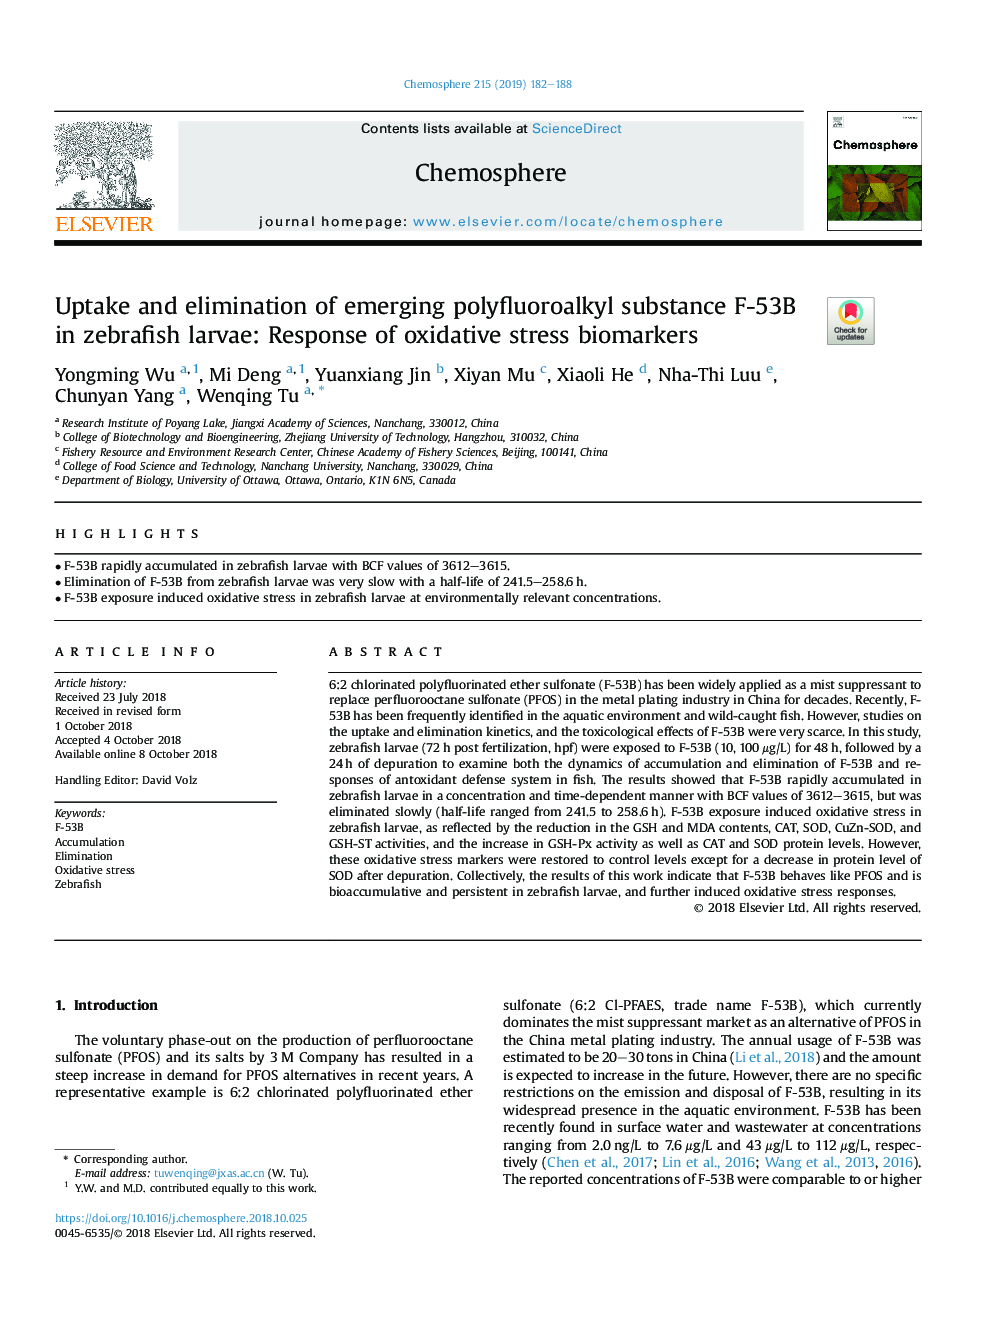 Uptake and elimination of emerging polyfluoroalkyl substance F-53B in zebrafish larvae: Response of oxidative stress biomarkers